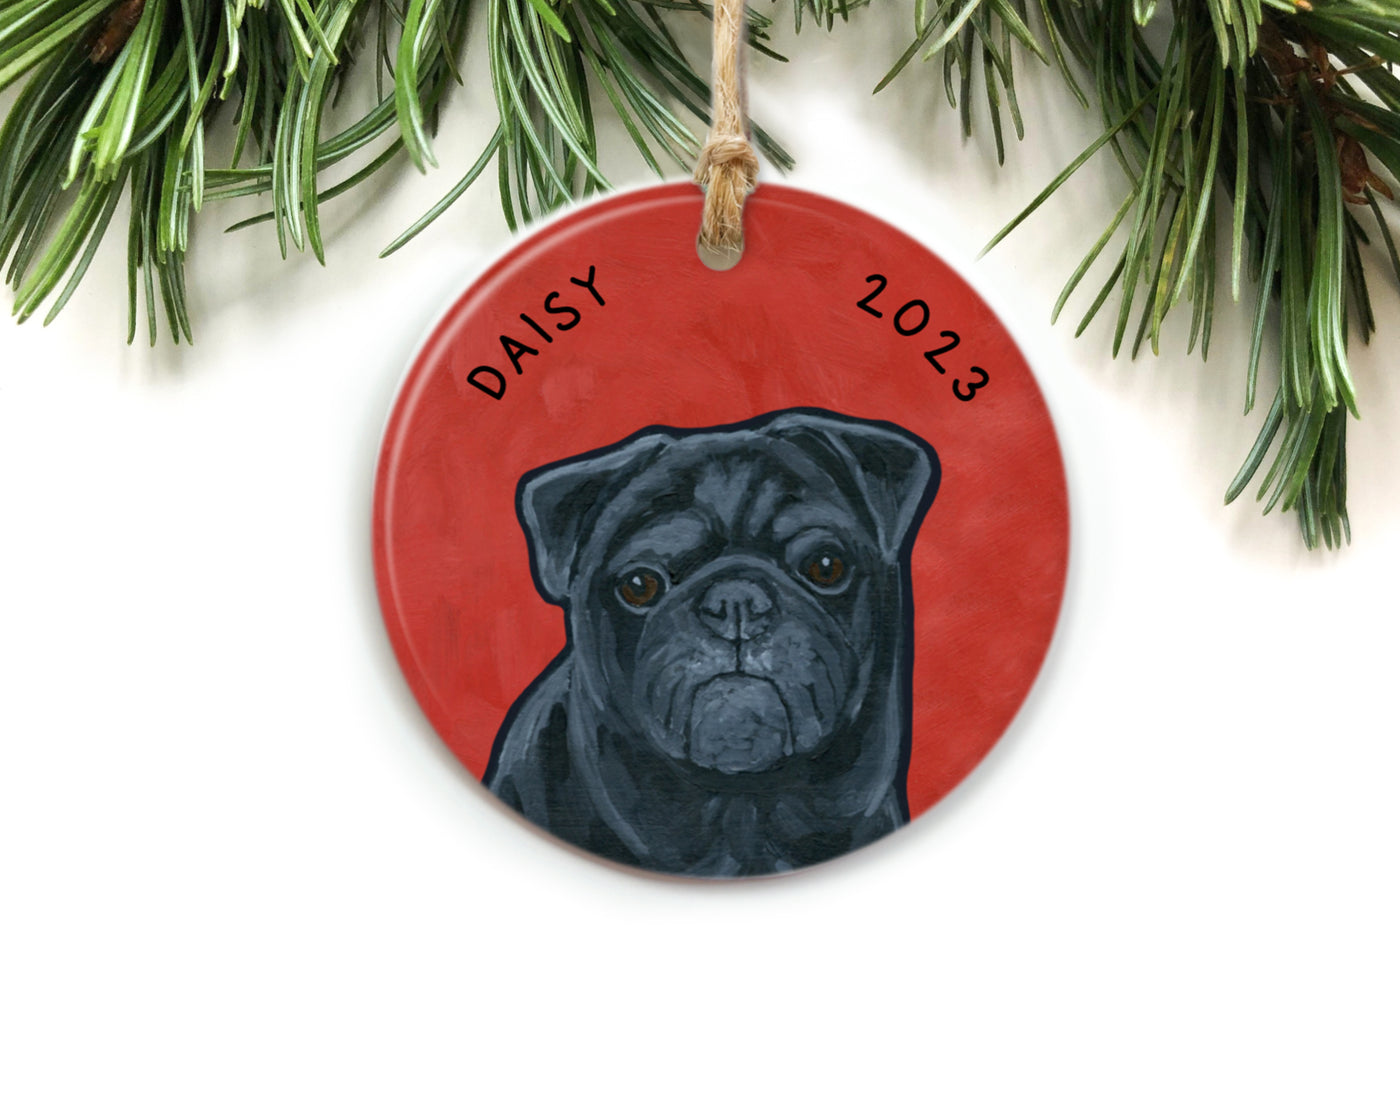 Pug Ornament